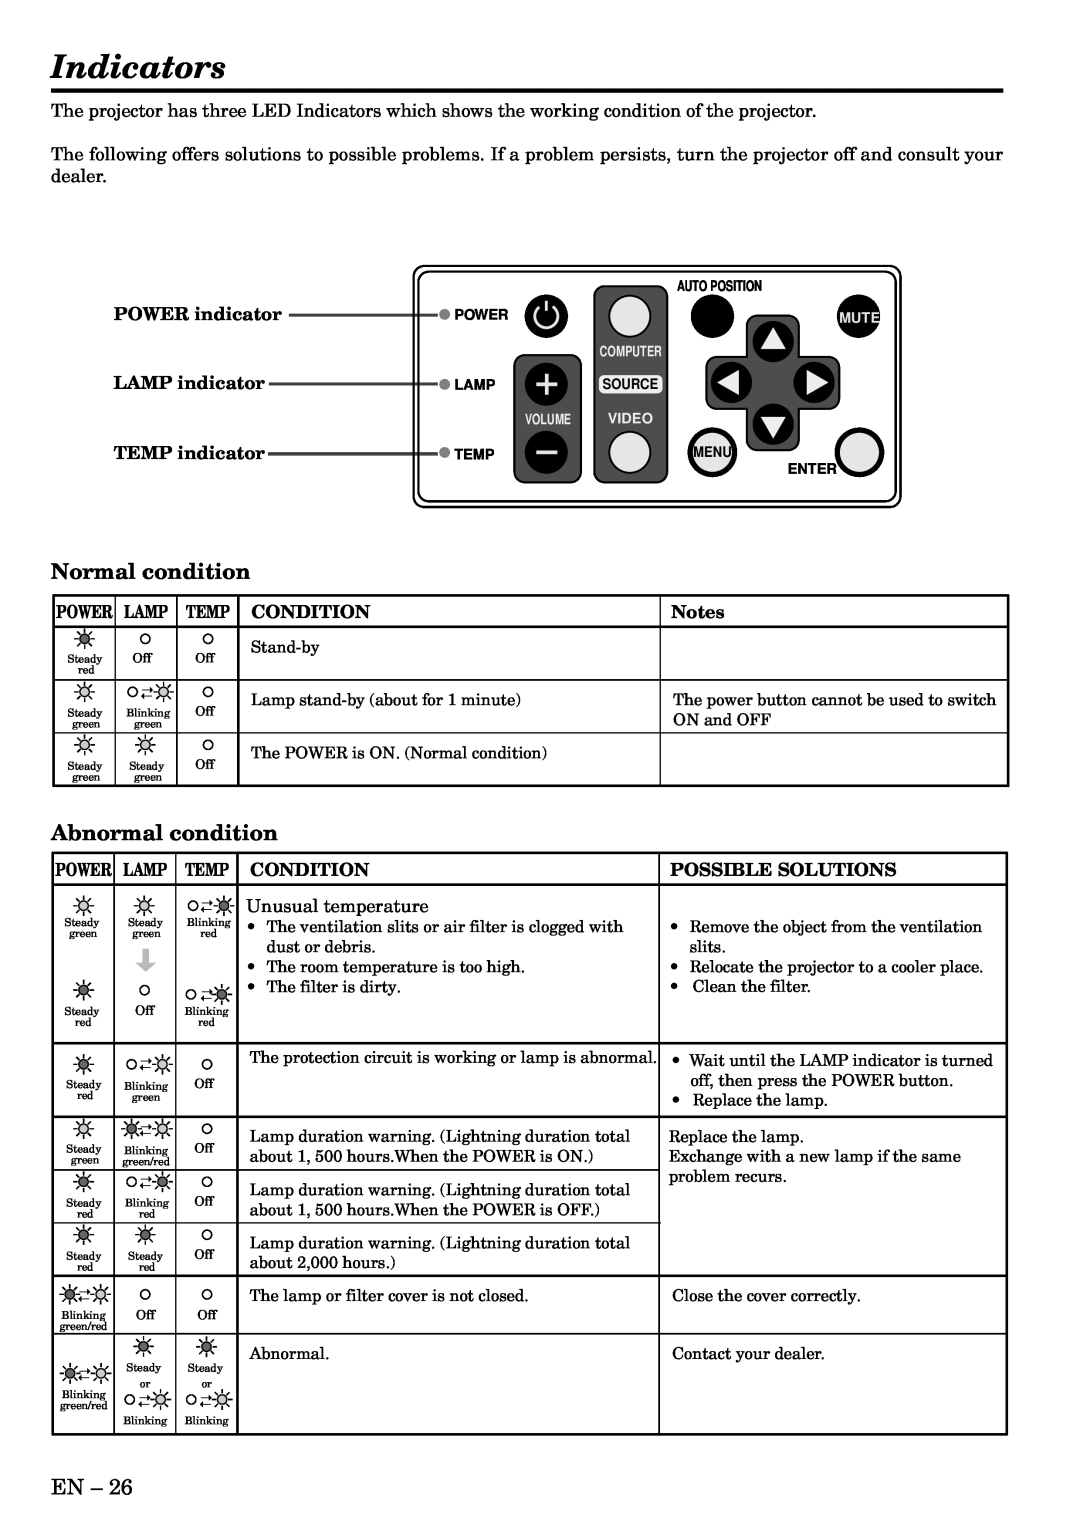 Mitsubishi Electronics X80 Indicators, POWER indicator LAMP indicator TEMP indicator, Power Lamp, Temp Condition 